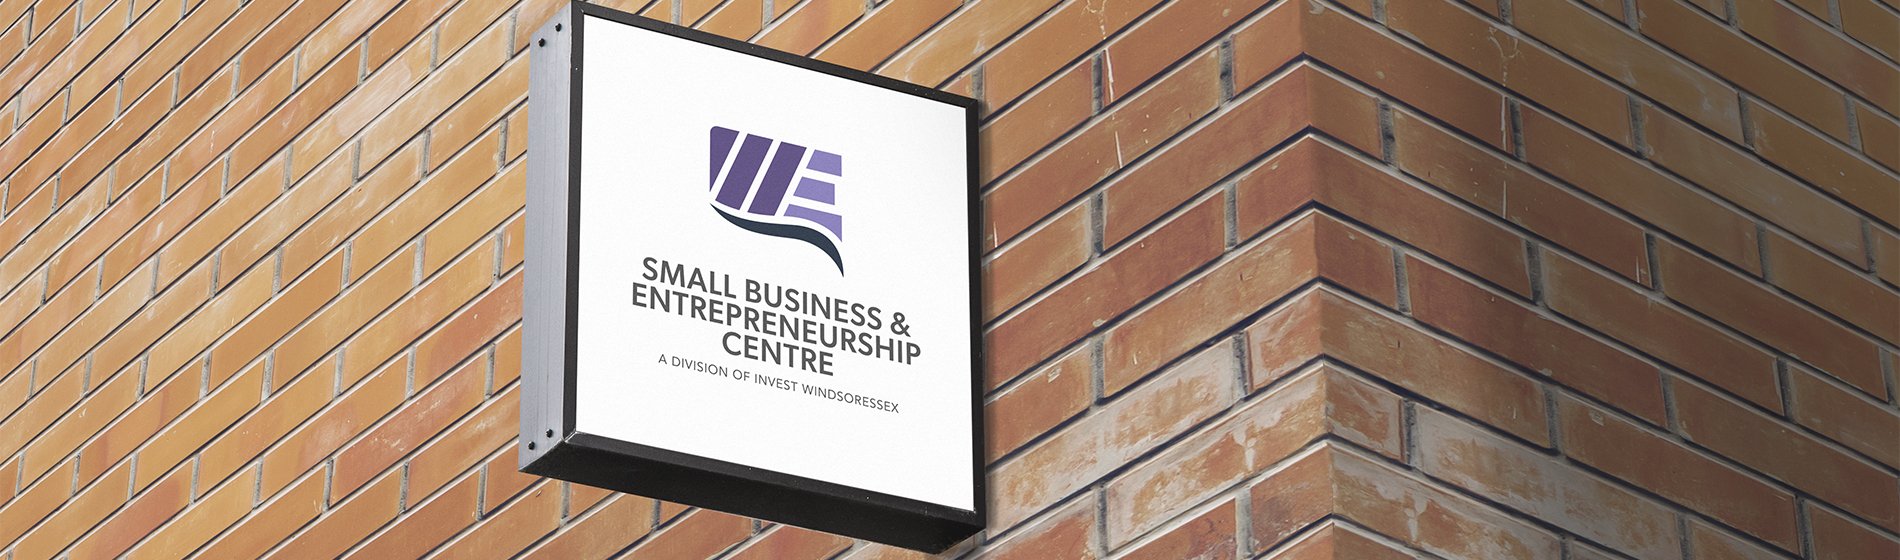 Small Business & Entrepreneurship Centre office signage